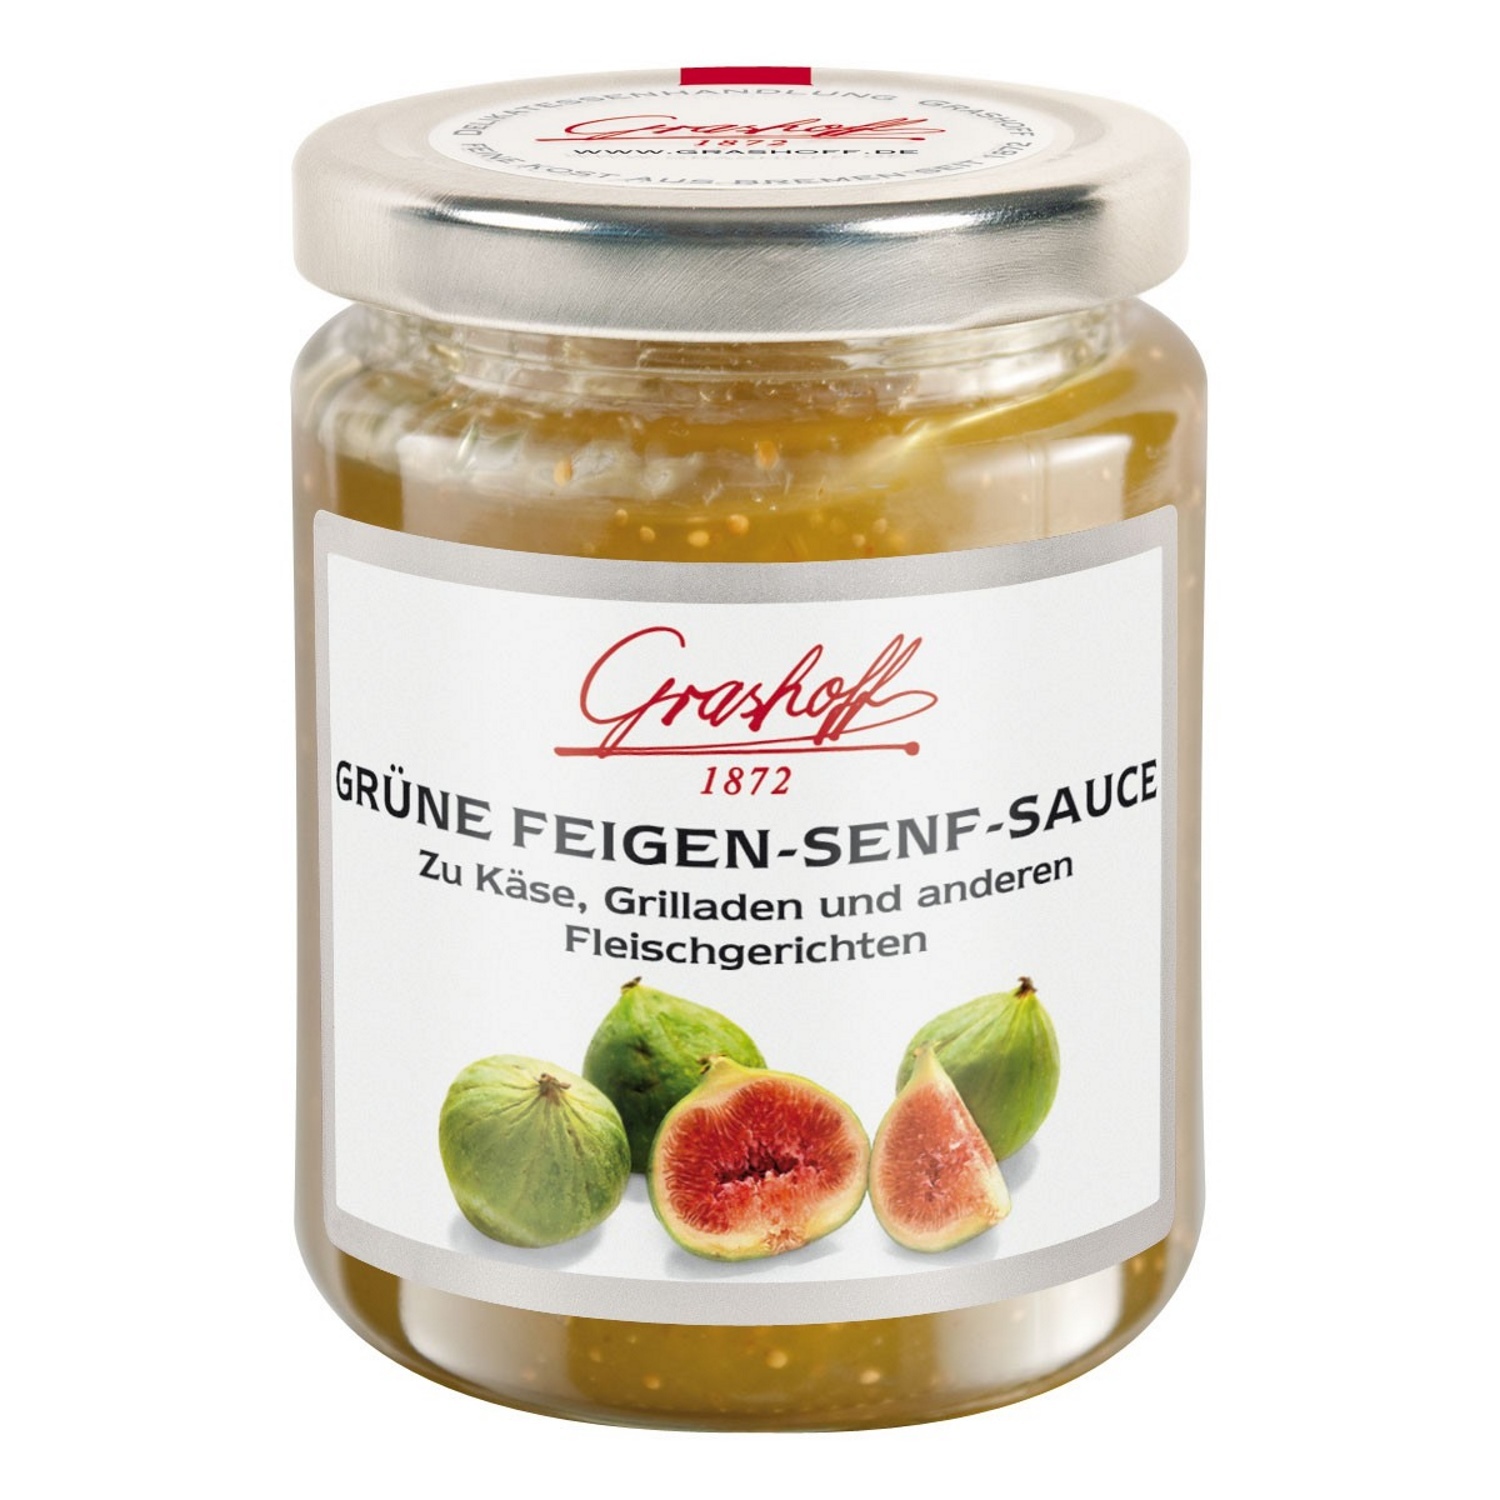 Grüne Feigen-Senf-Sauce 125 gr. - Grashoff 1872